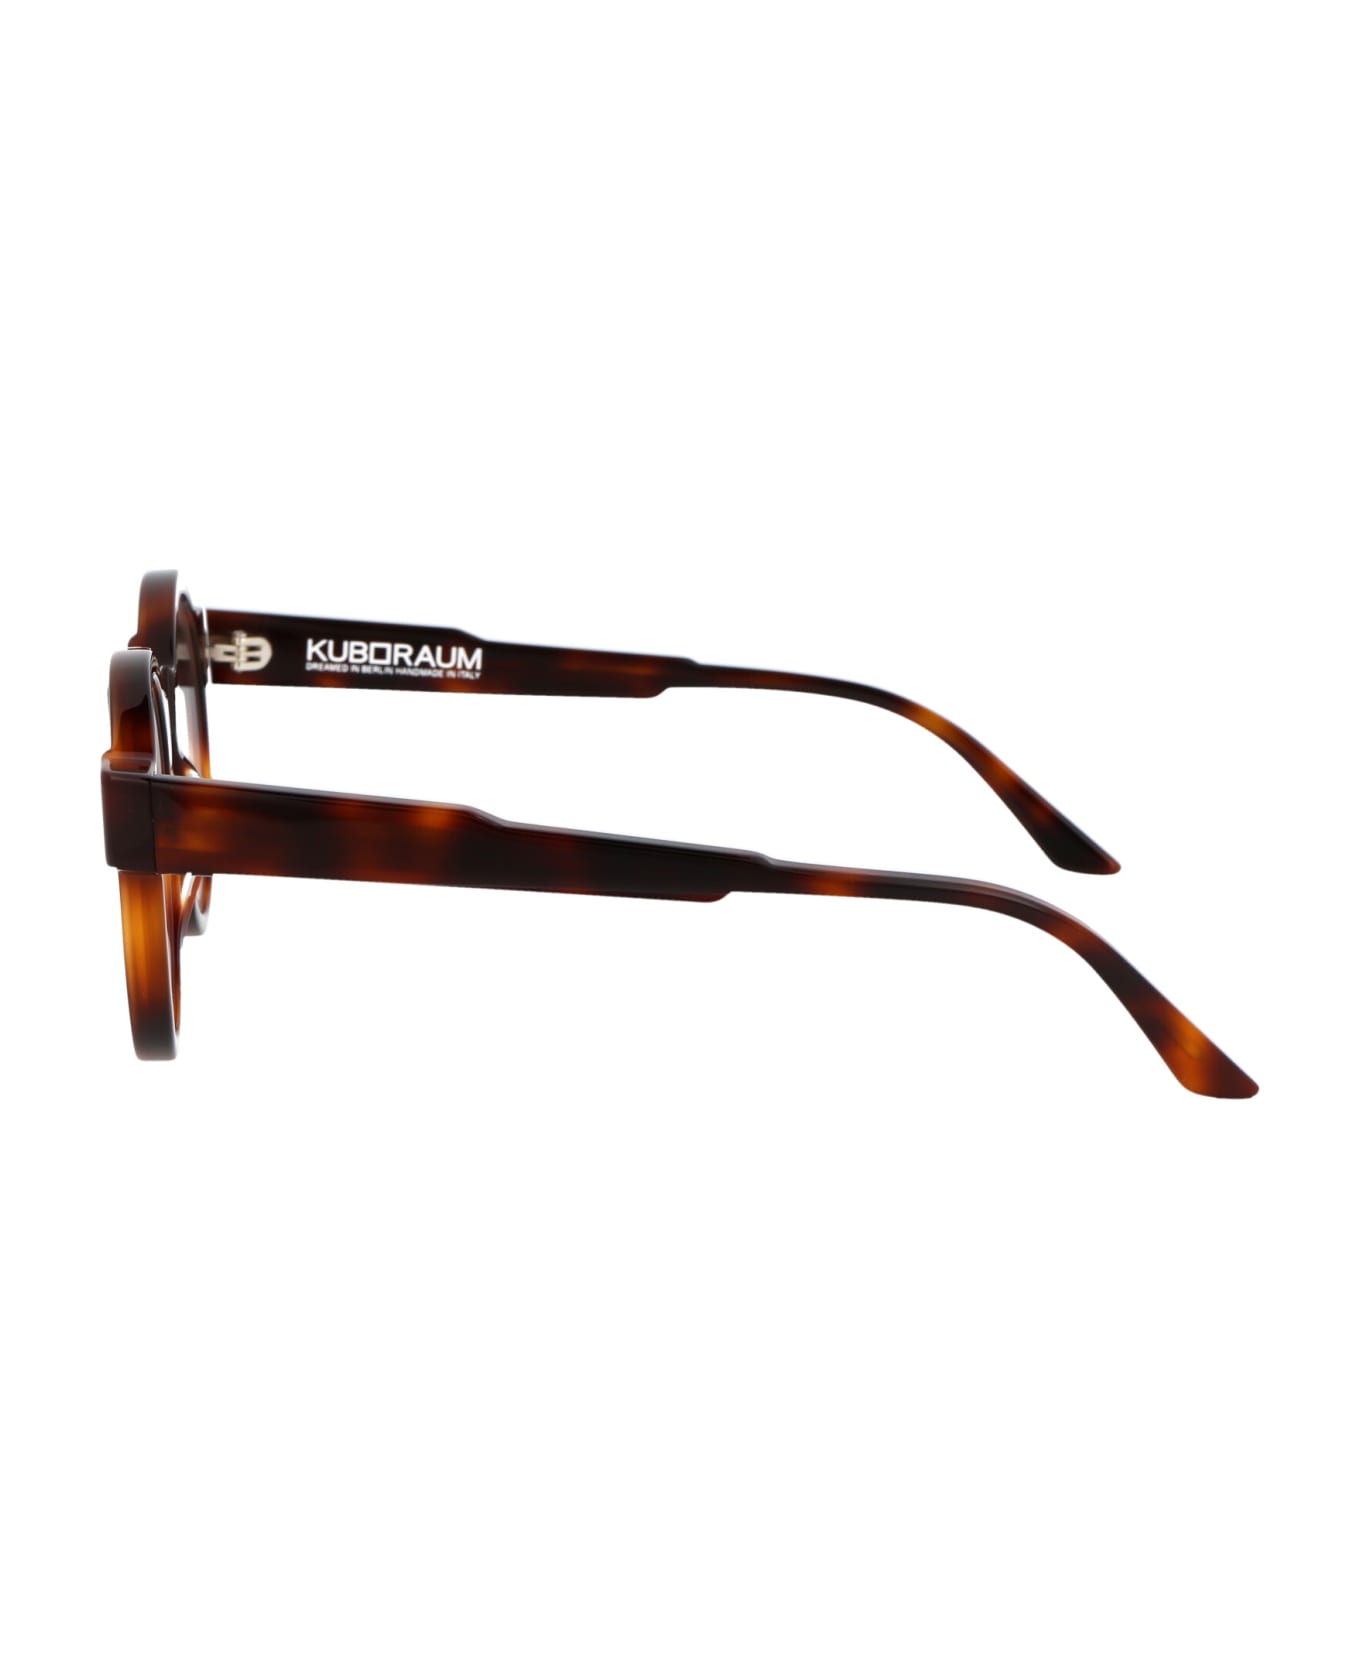 Kuboraum Maske K10 Glasses - HA アイウェア